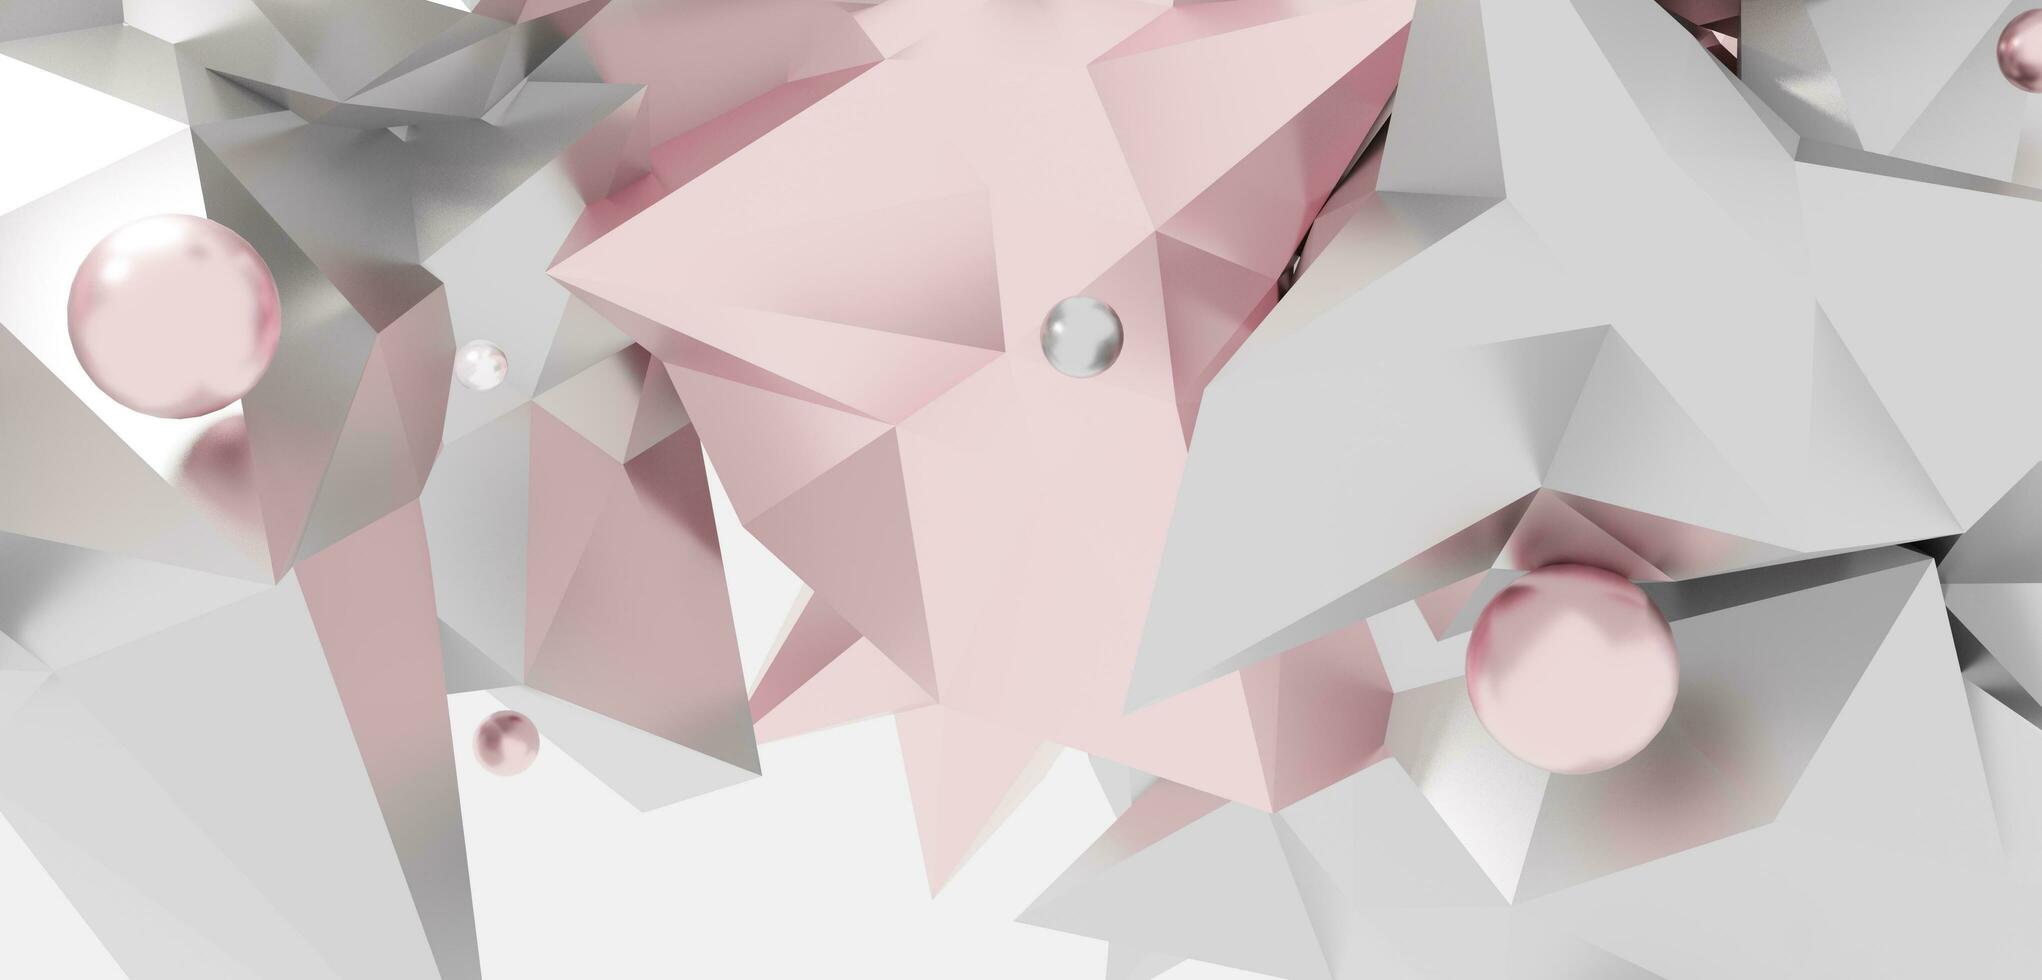 Pattern of sharp edges shiny sharp corner modern geometric abstract background 3D illustration photo